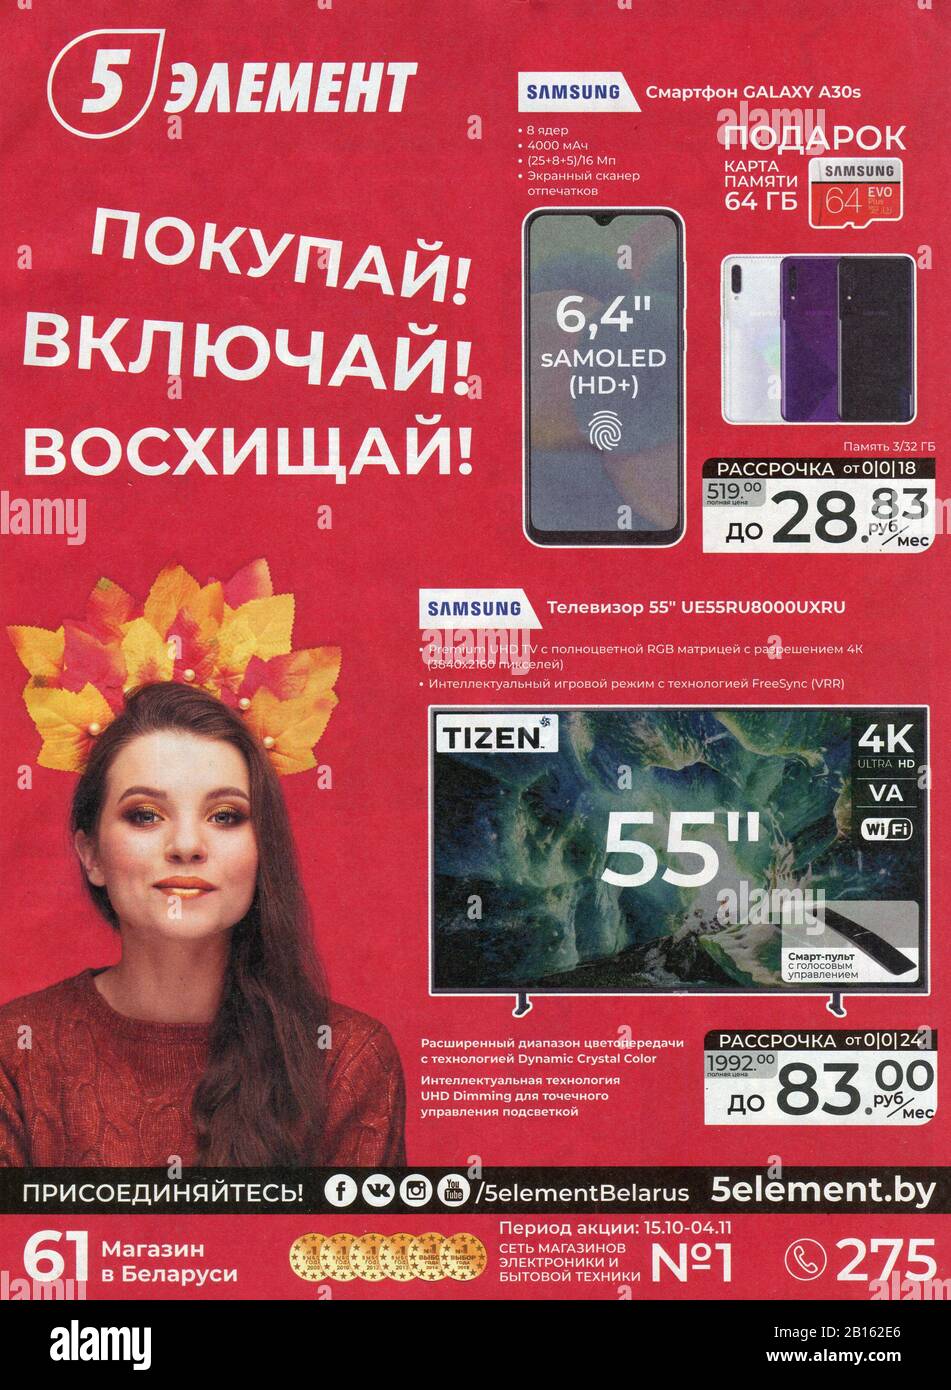 Advertising leaflet 5 element. Stock Photo